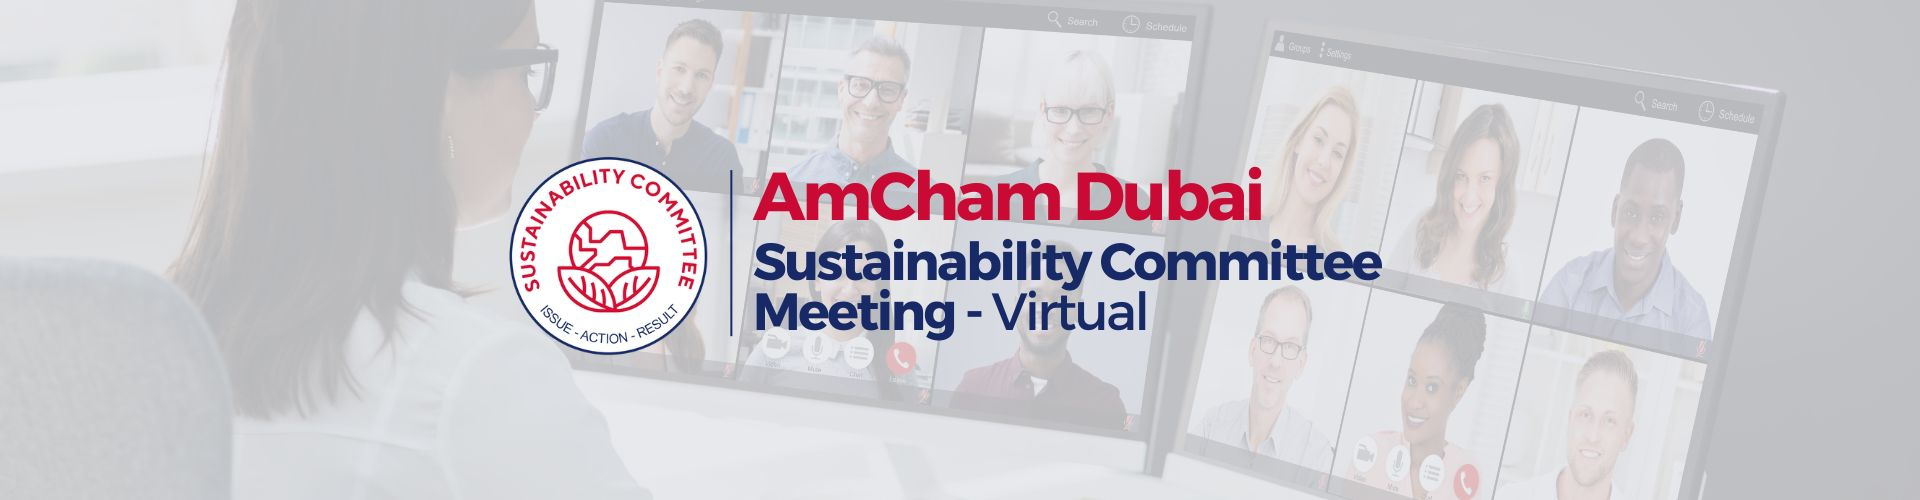 thumbnails AmCham Dubai Sustainability Committee Meeting - Virtual